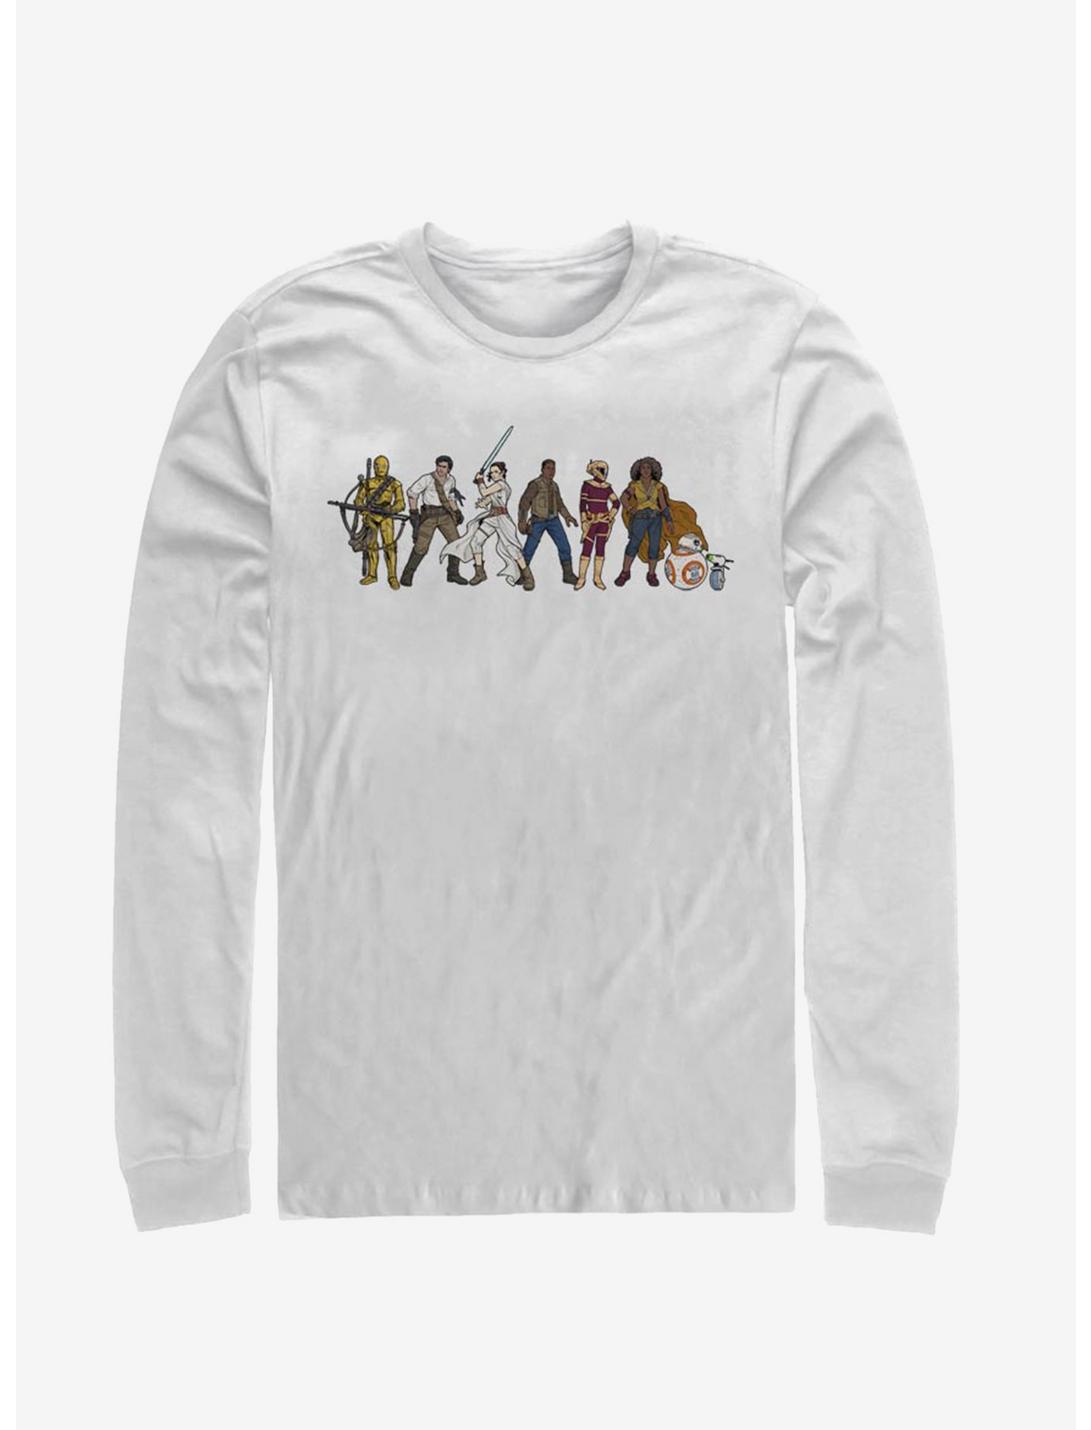 Star Wars Episode IX The Rise Of Skywalker Resistance Line-Up Long-Sleeve T-Shirt, WHITE, hi-res